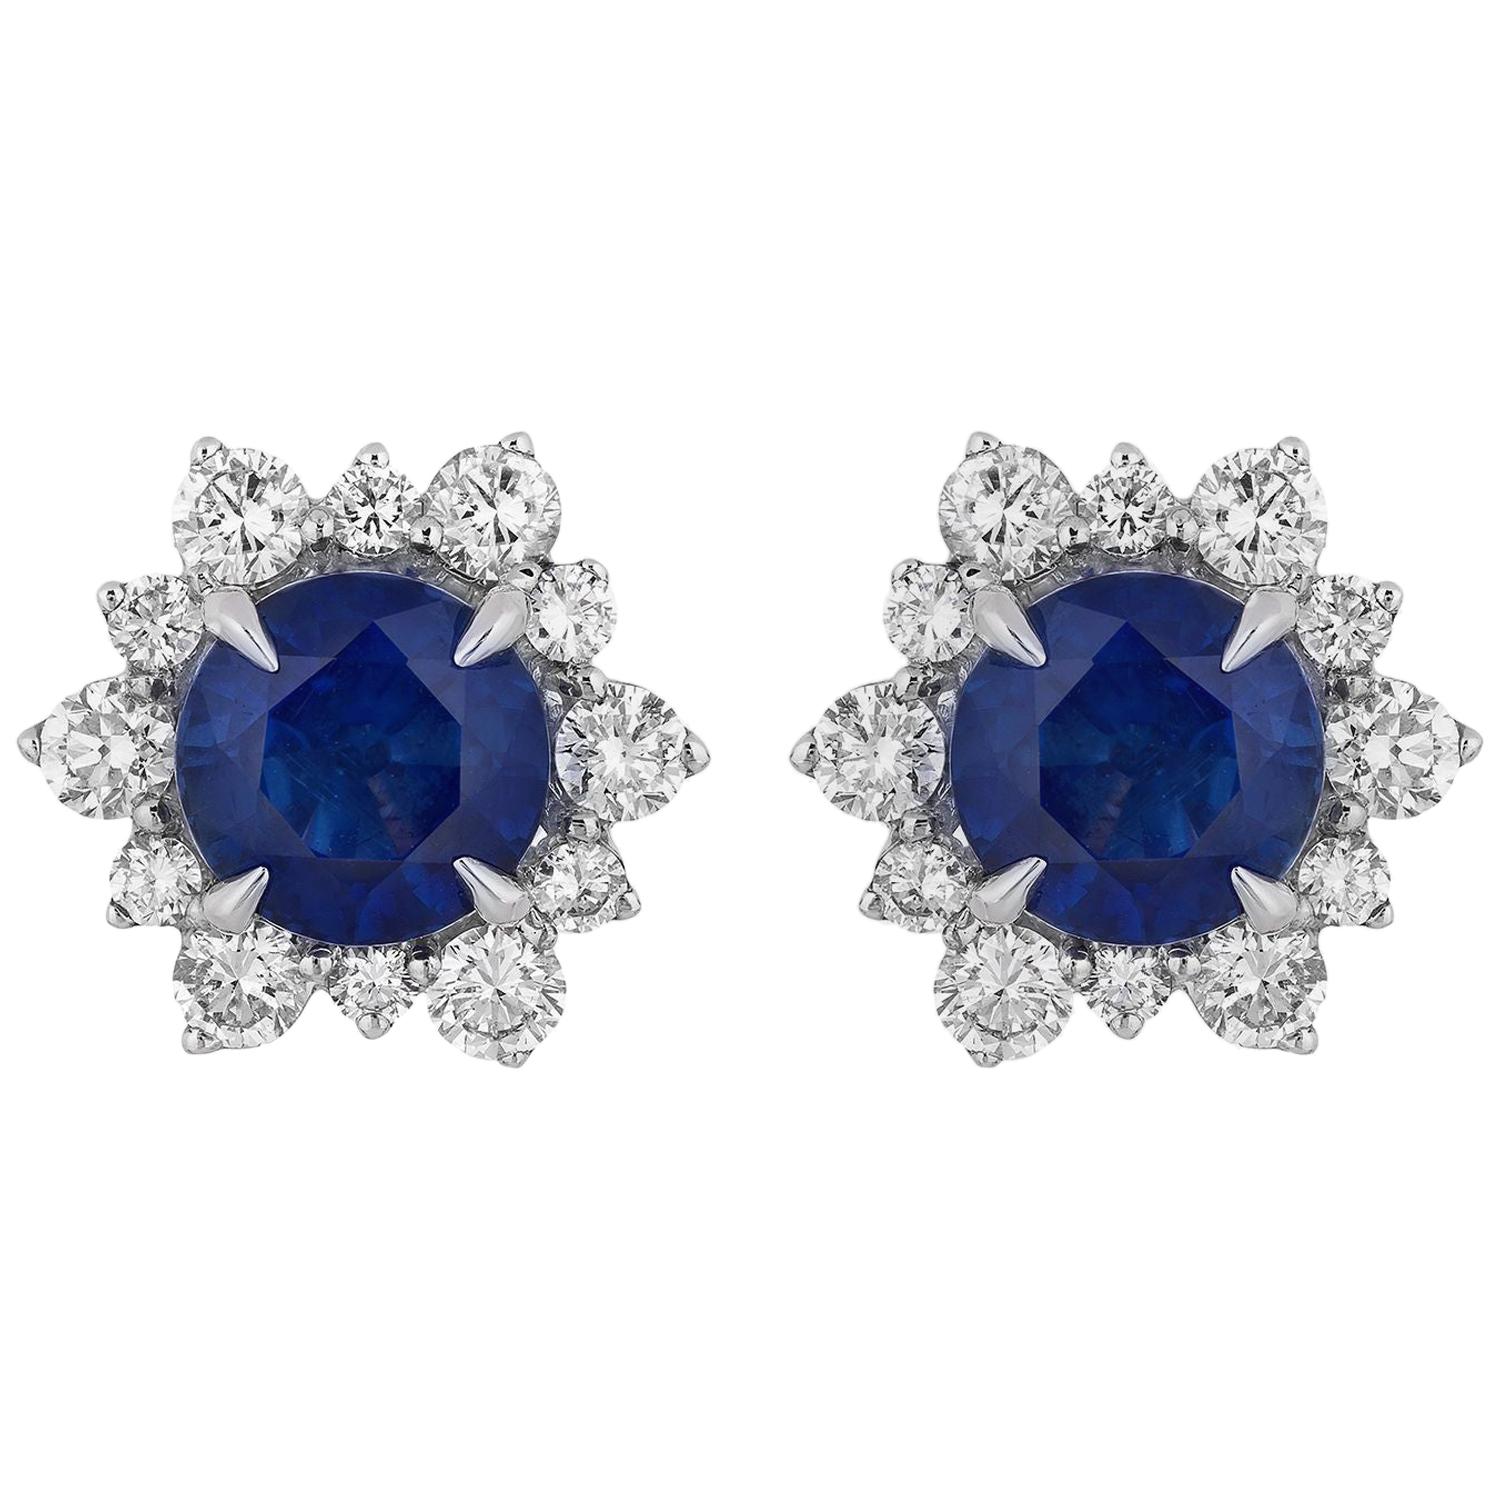 3.94 Carat Sapphire Diamond Earrings